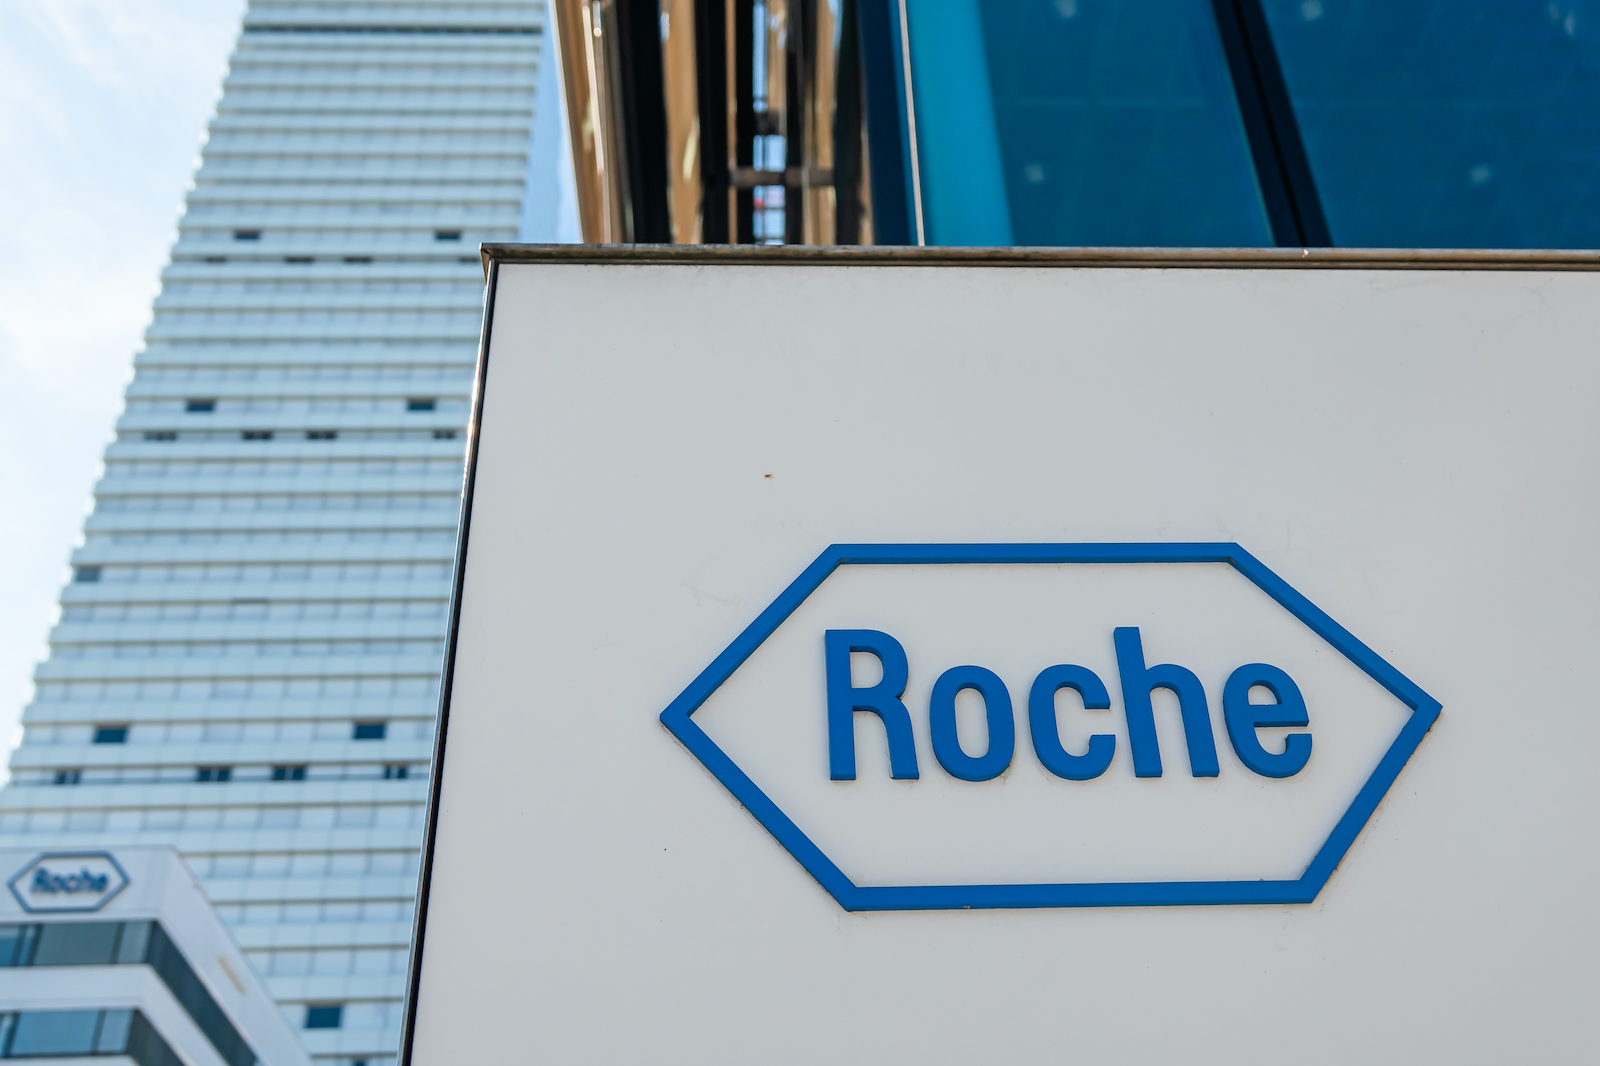 Biuro firmy Roche w Szwajcarii, fot. Taljat David / Shutterstock.com